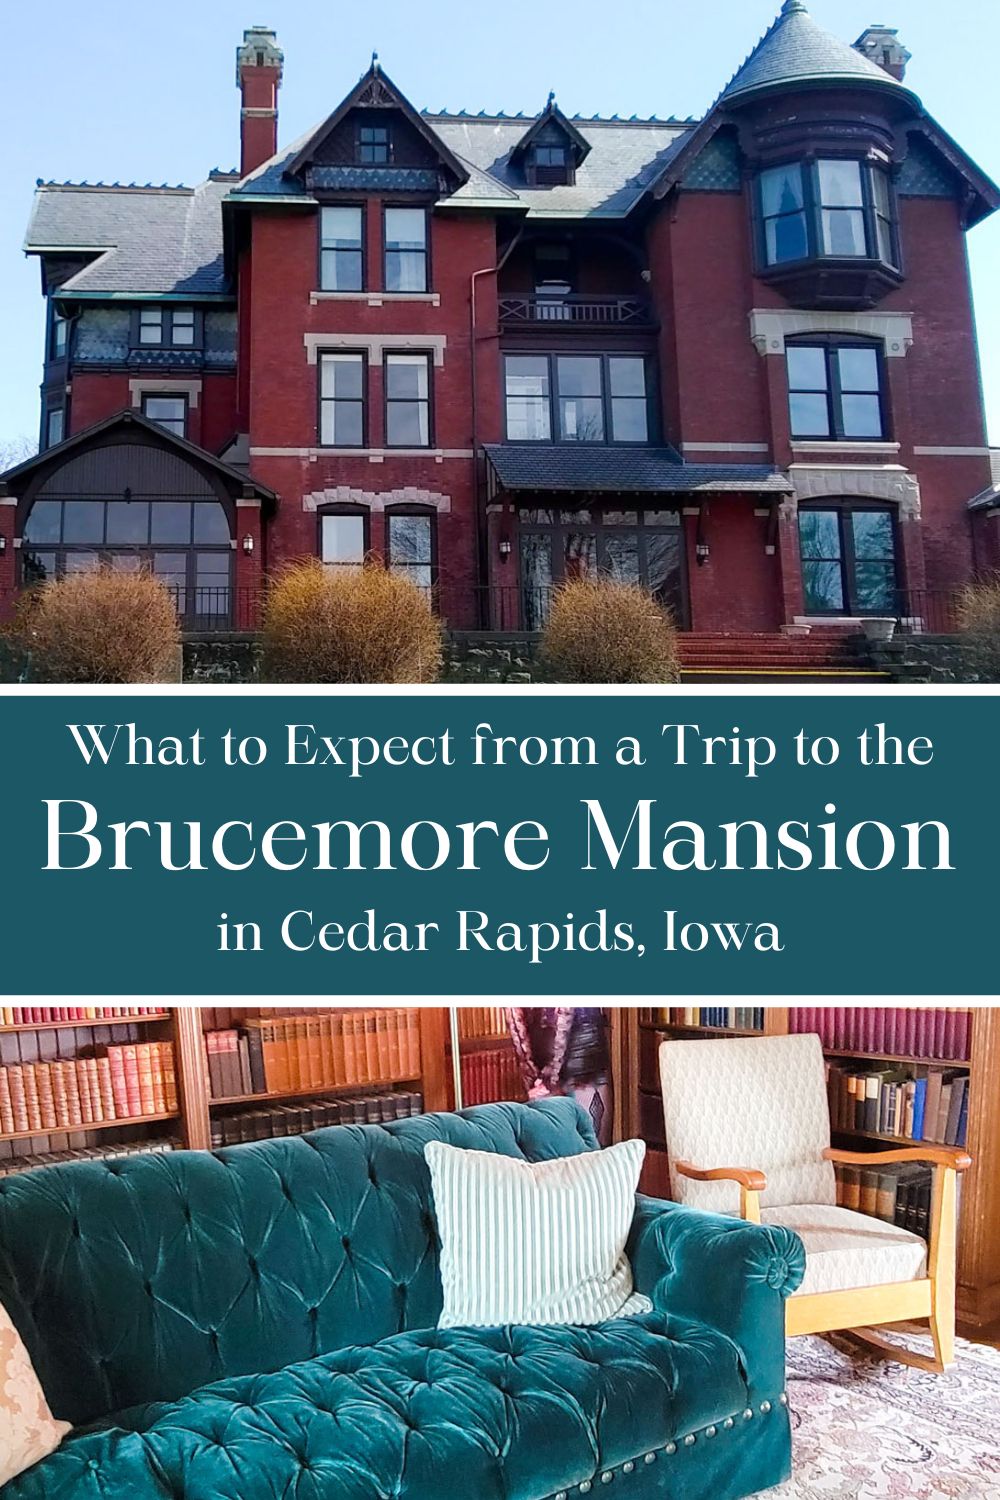 Brucemore Mansion